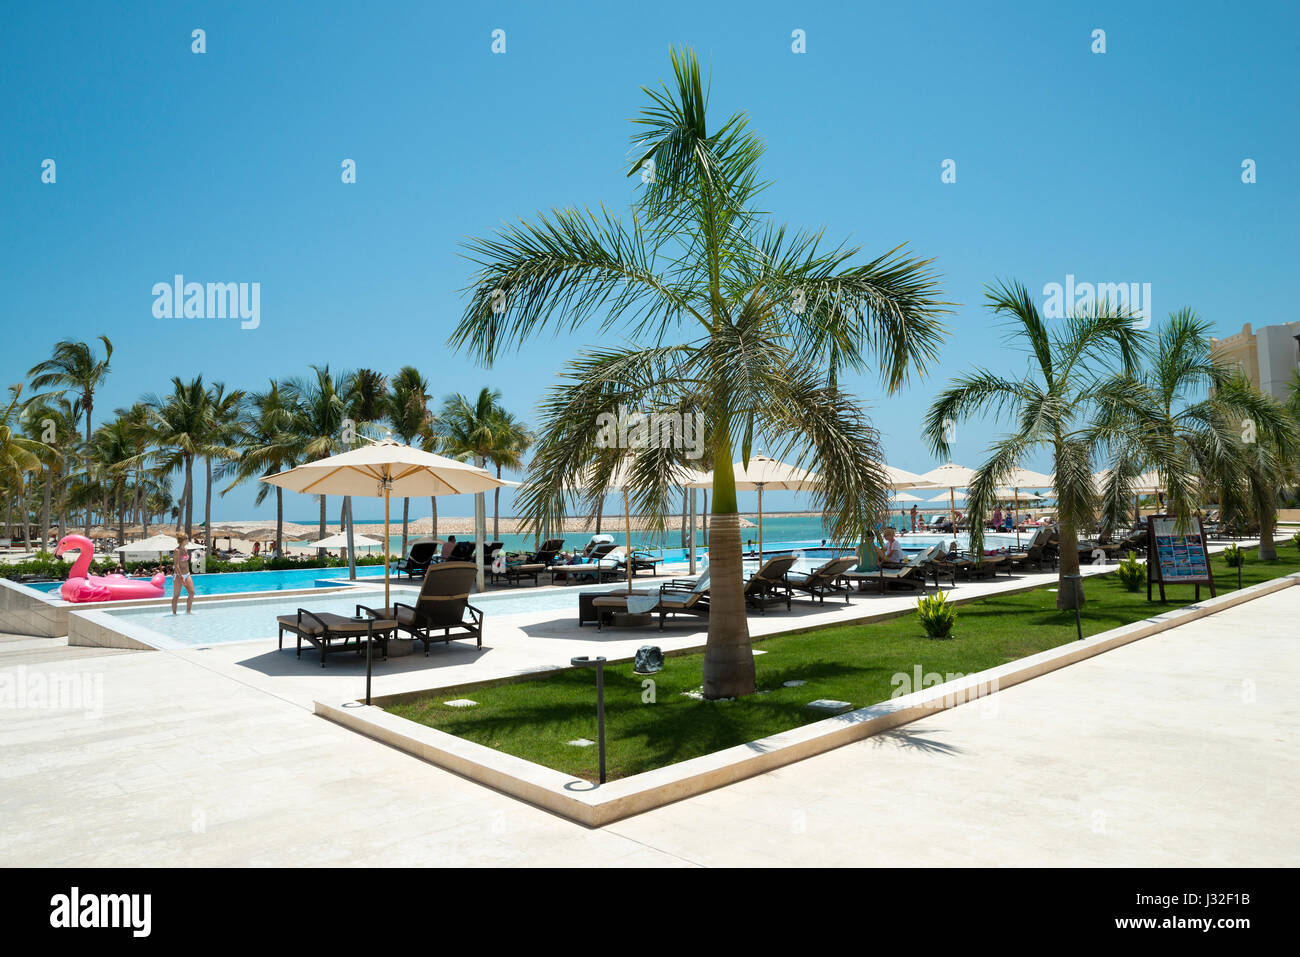 Hotel Al Fanar, Salalah, Dhofar Governorate, Oman Stock Photo - Alamy